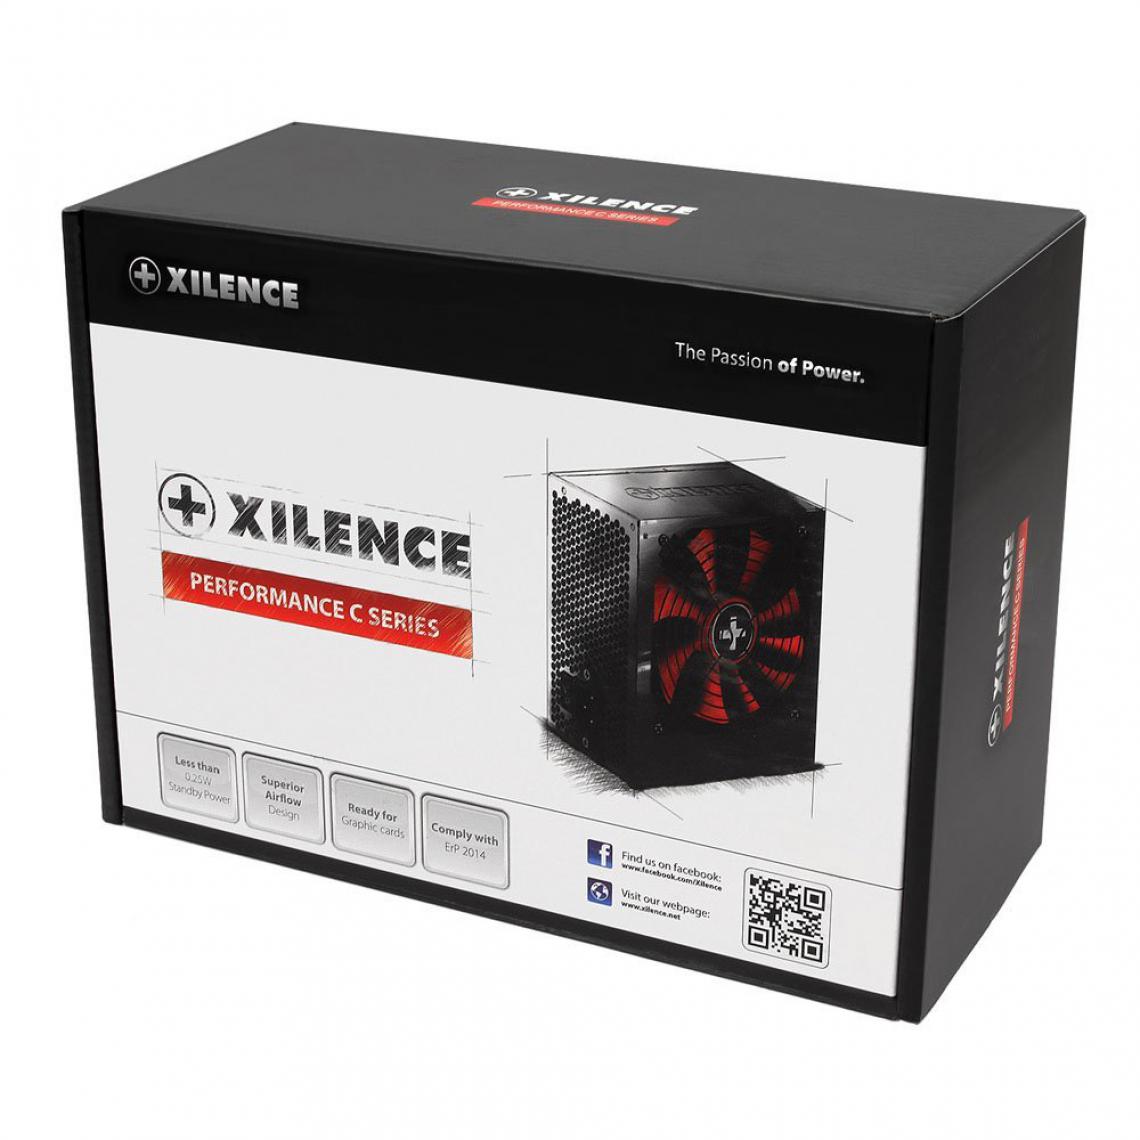 Xilence - Performance C Series XP400 - 300 Watt - Alimentation modulaire